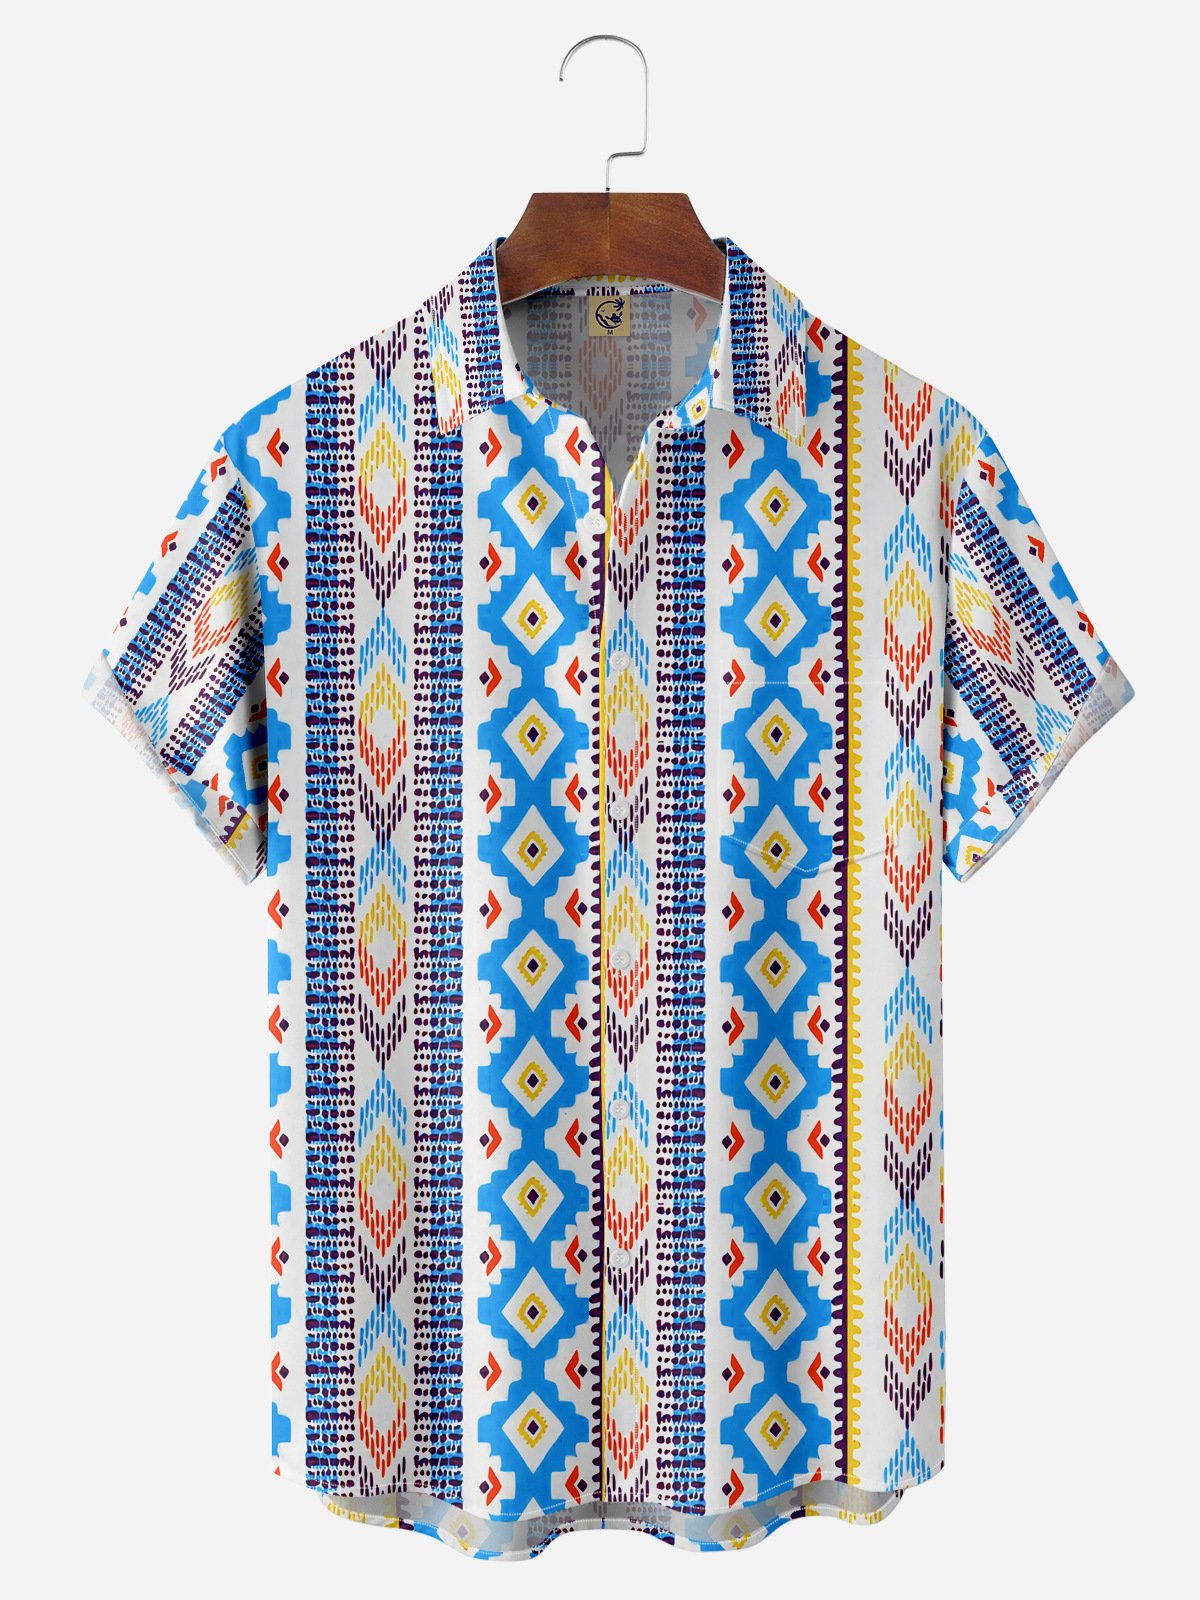 Ethnic Geometric Chest Pocket Short Sleeve Casual Shirt